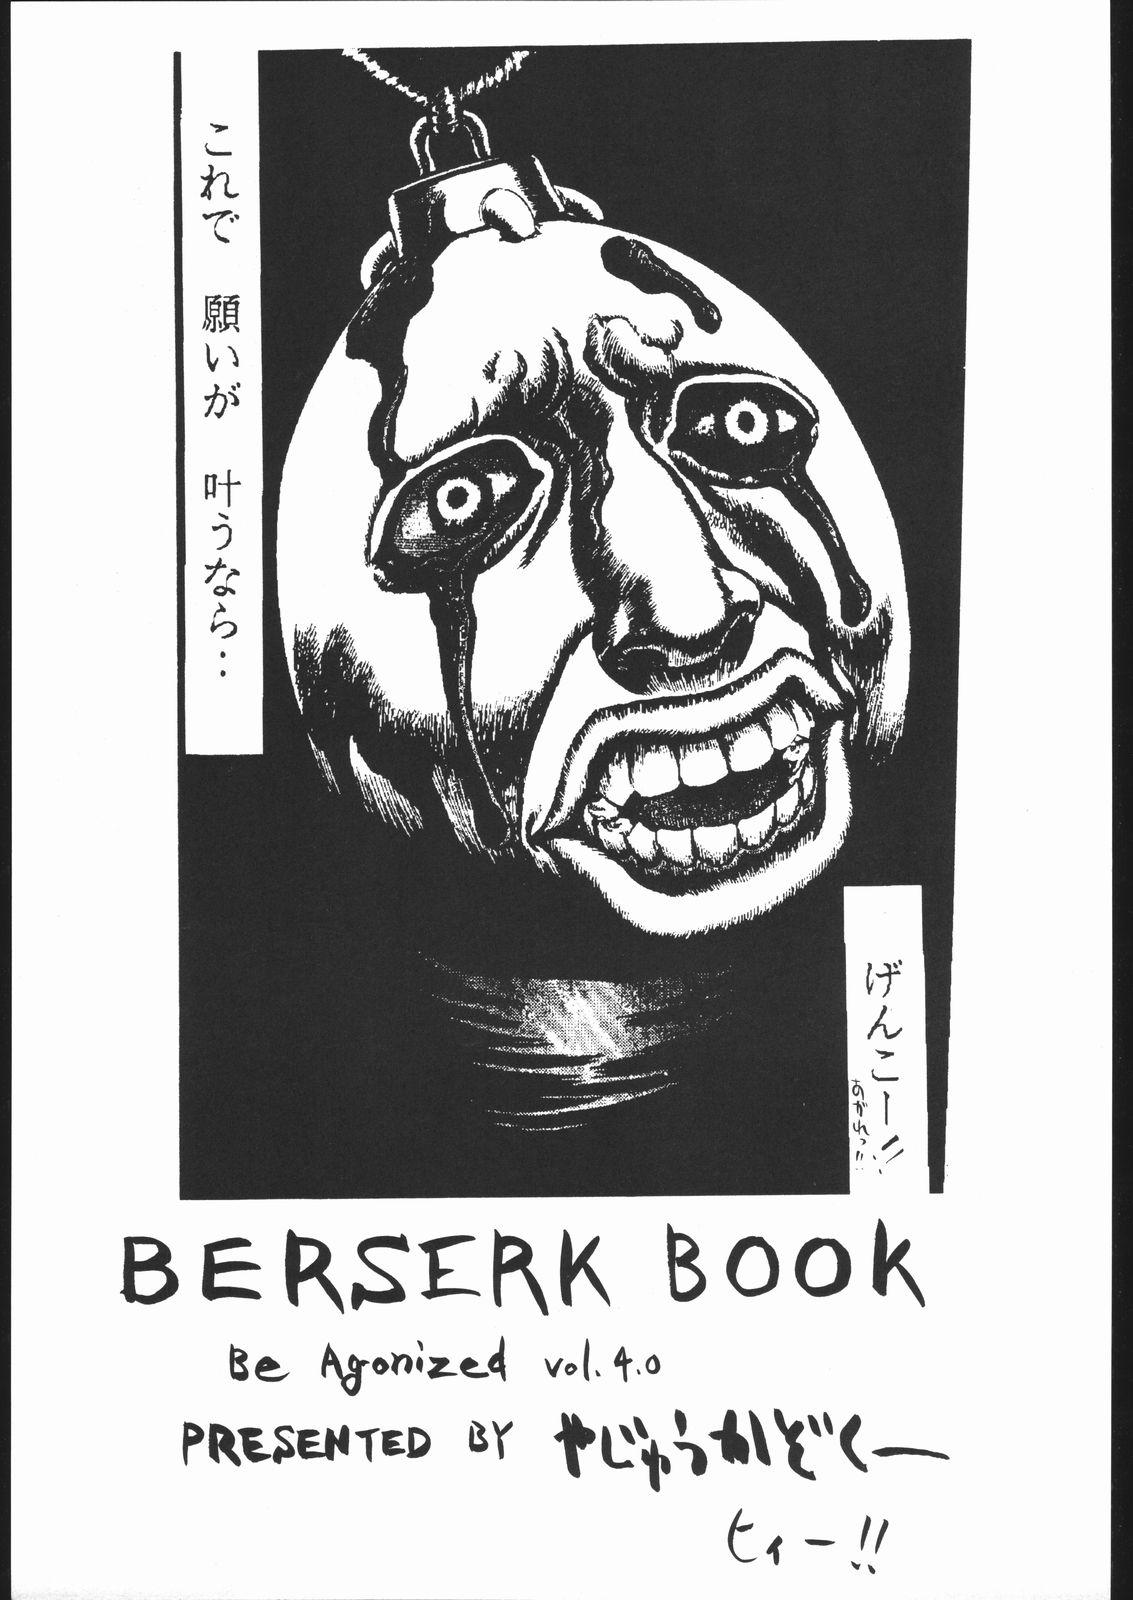 Be Agonized vol 4.0 - Berserk Book 1